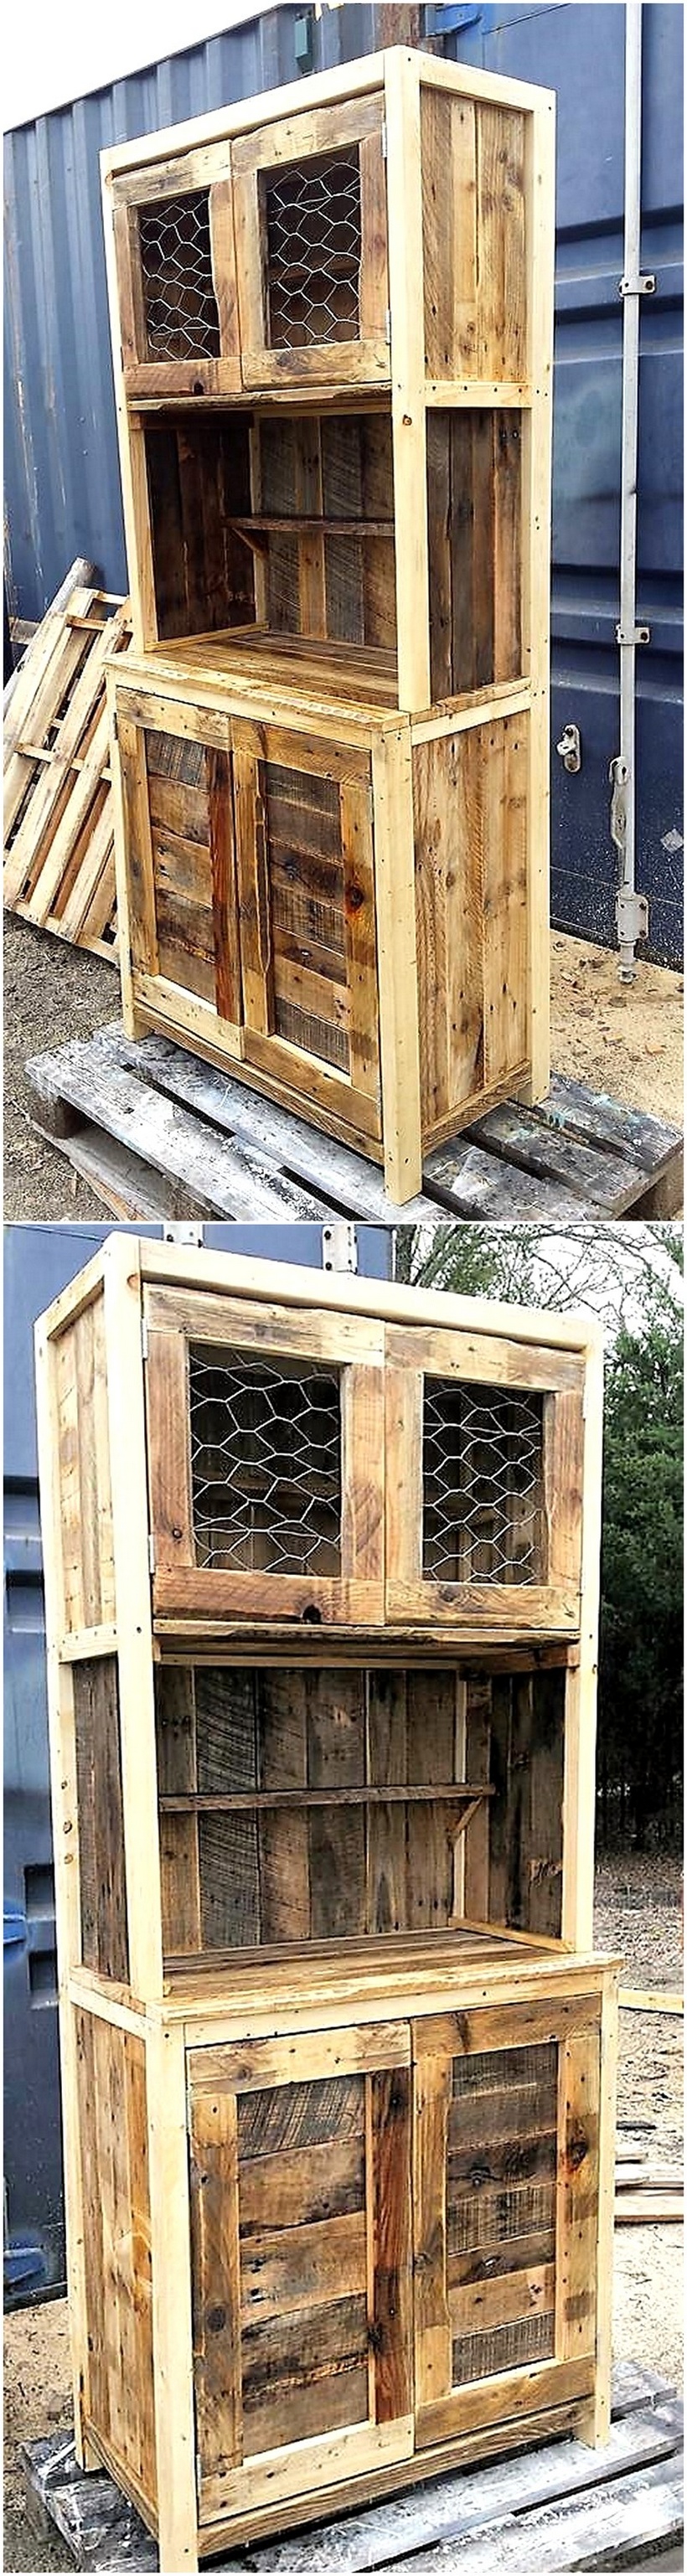 pallet rustic storage cabinet